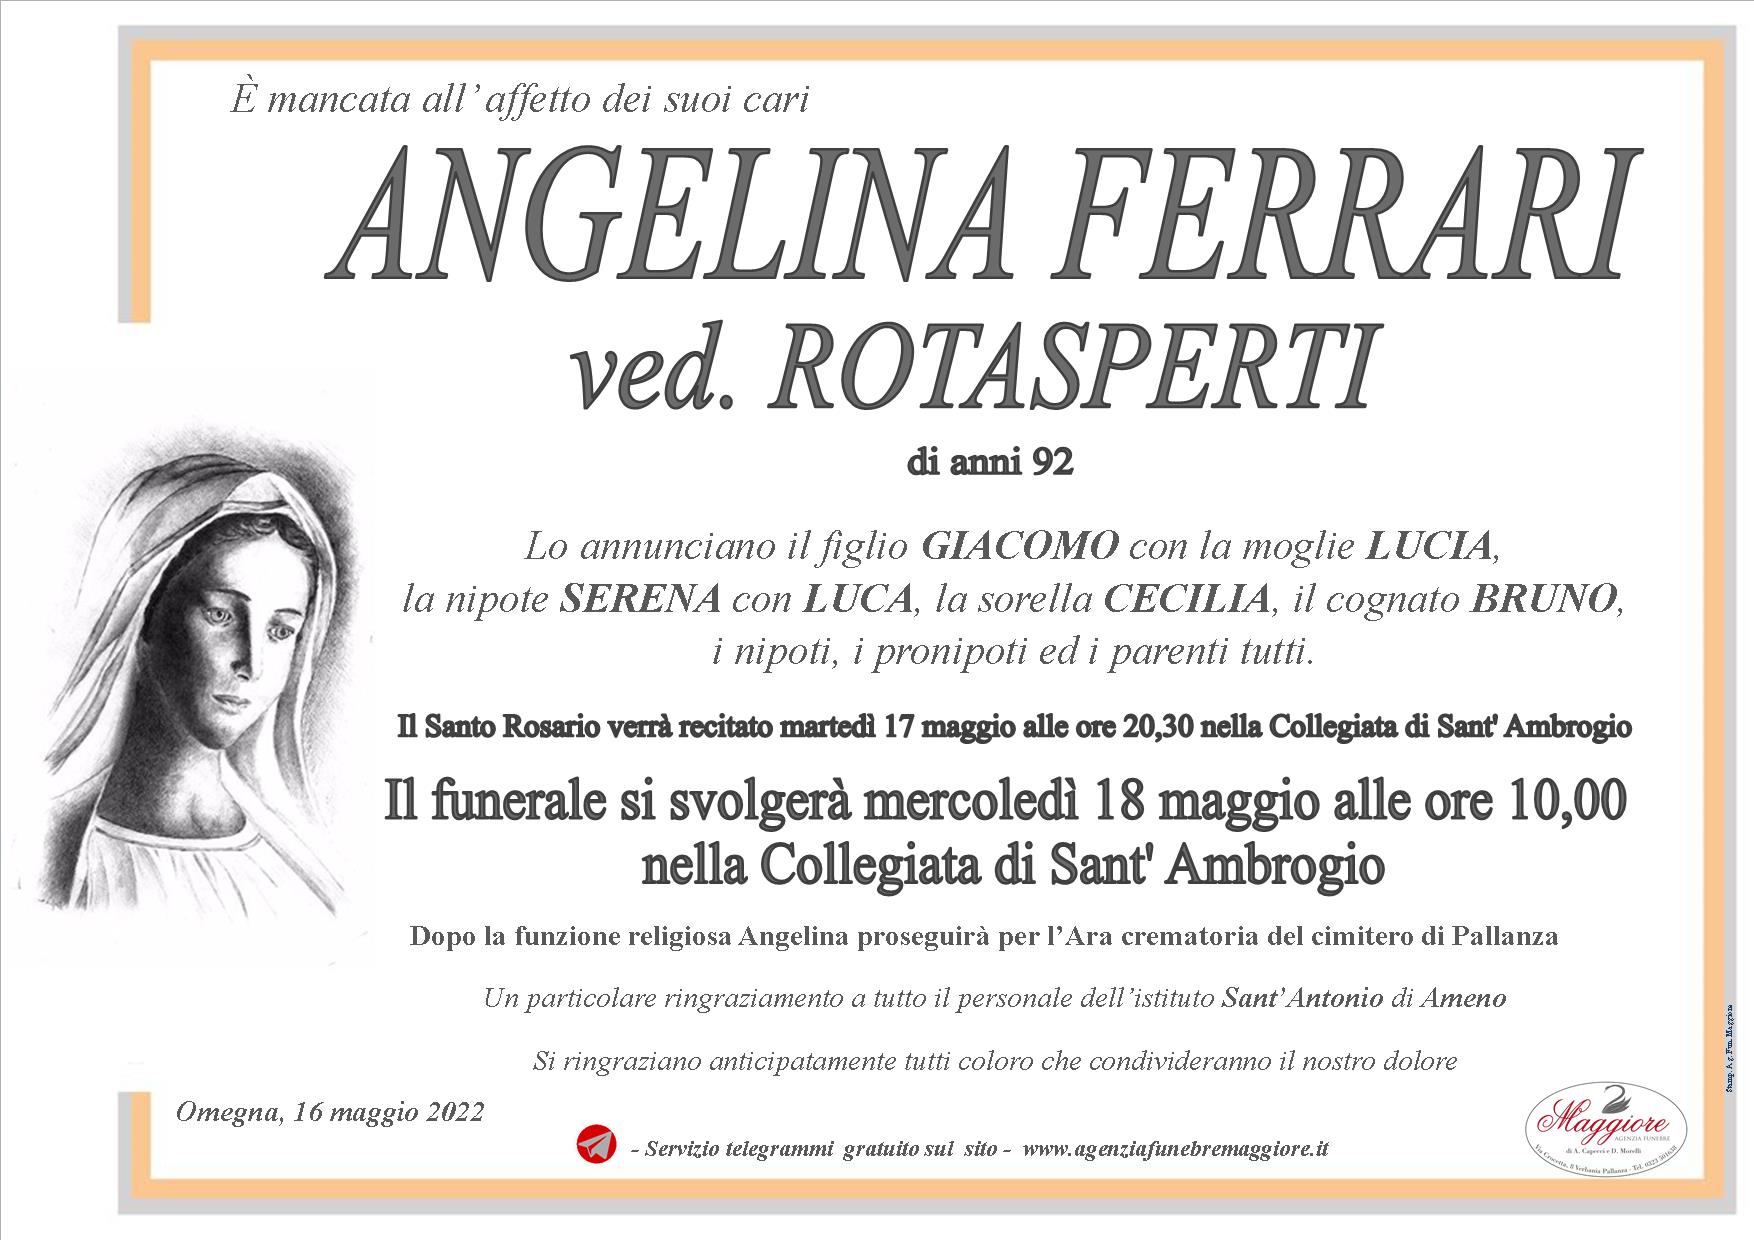 Angelina Ferrari ved. Rotasperti